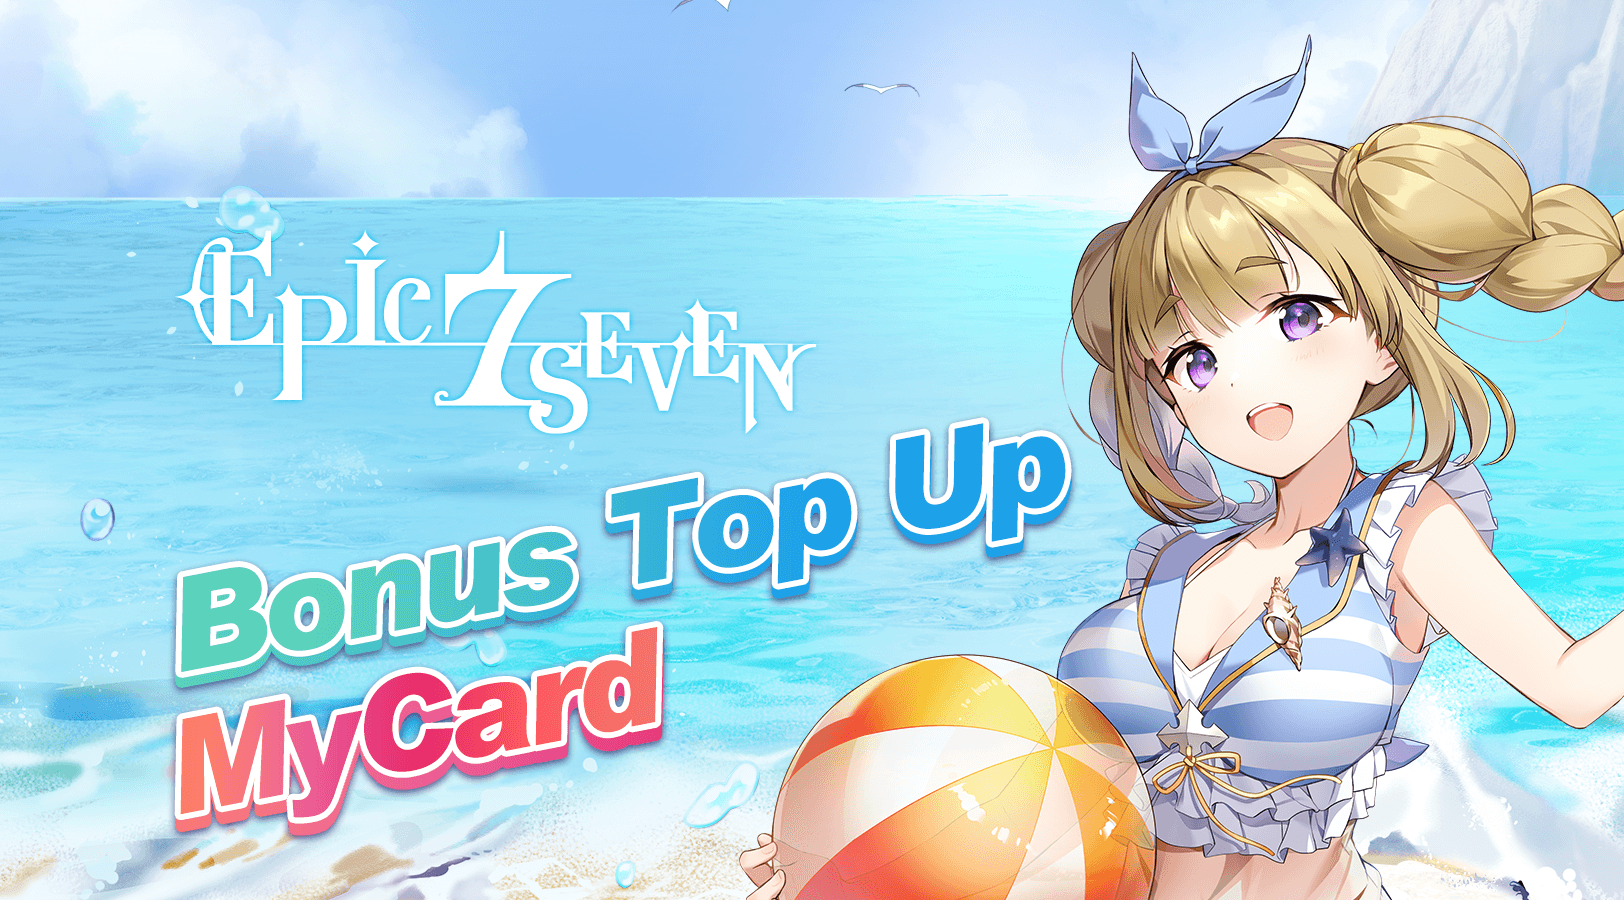   《epic 7 seven》Bonus Top Up MyCard